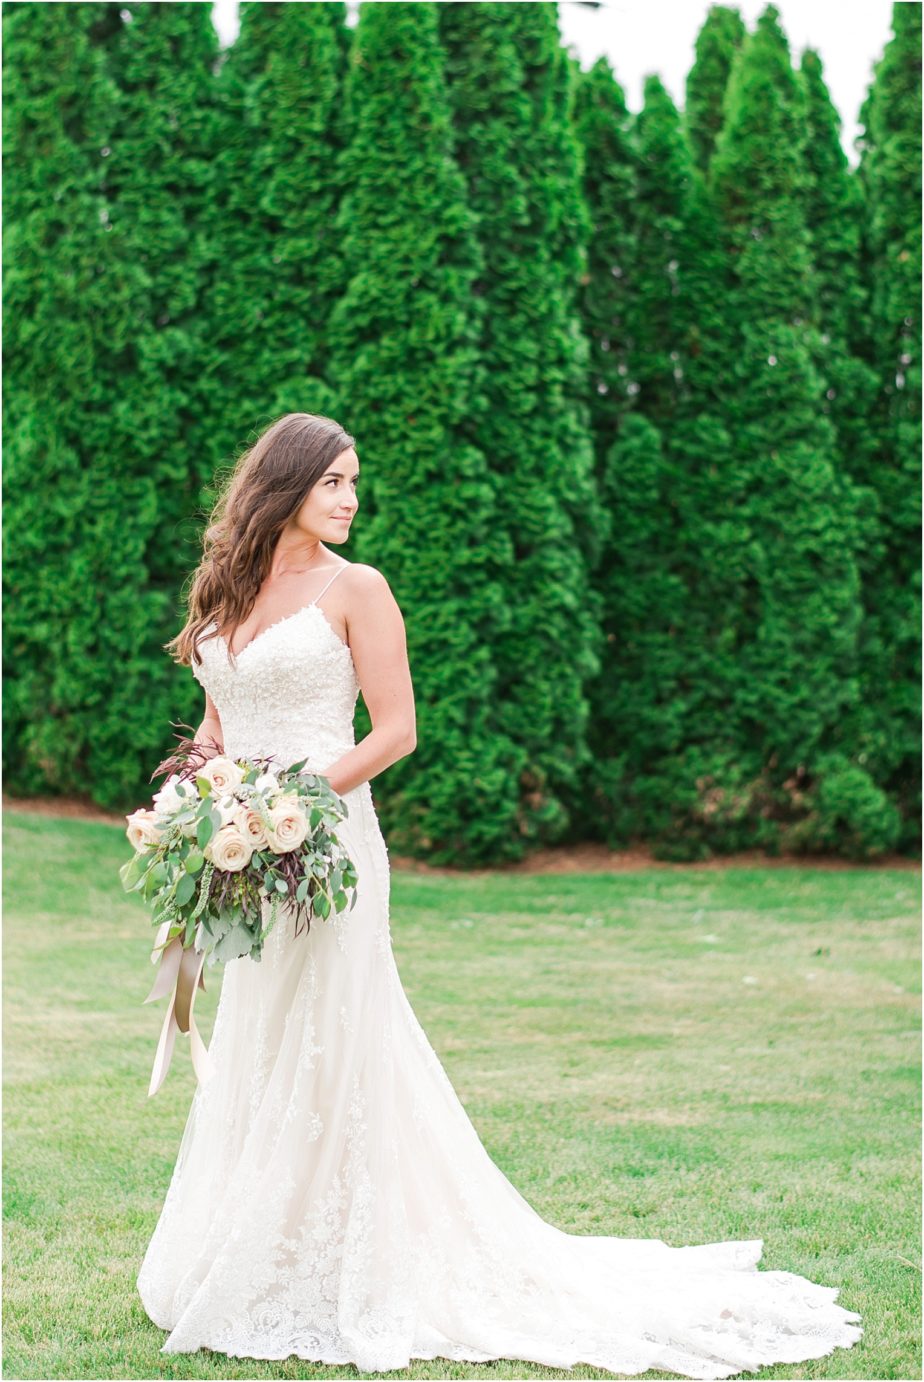 Romantic backyard wedding prosser photographer calvin and kelly bride and groom portrait